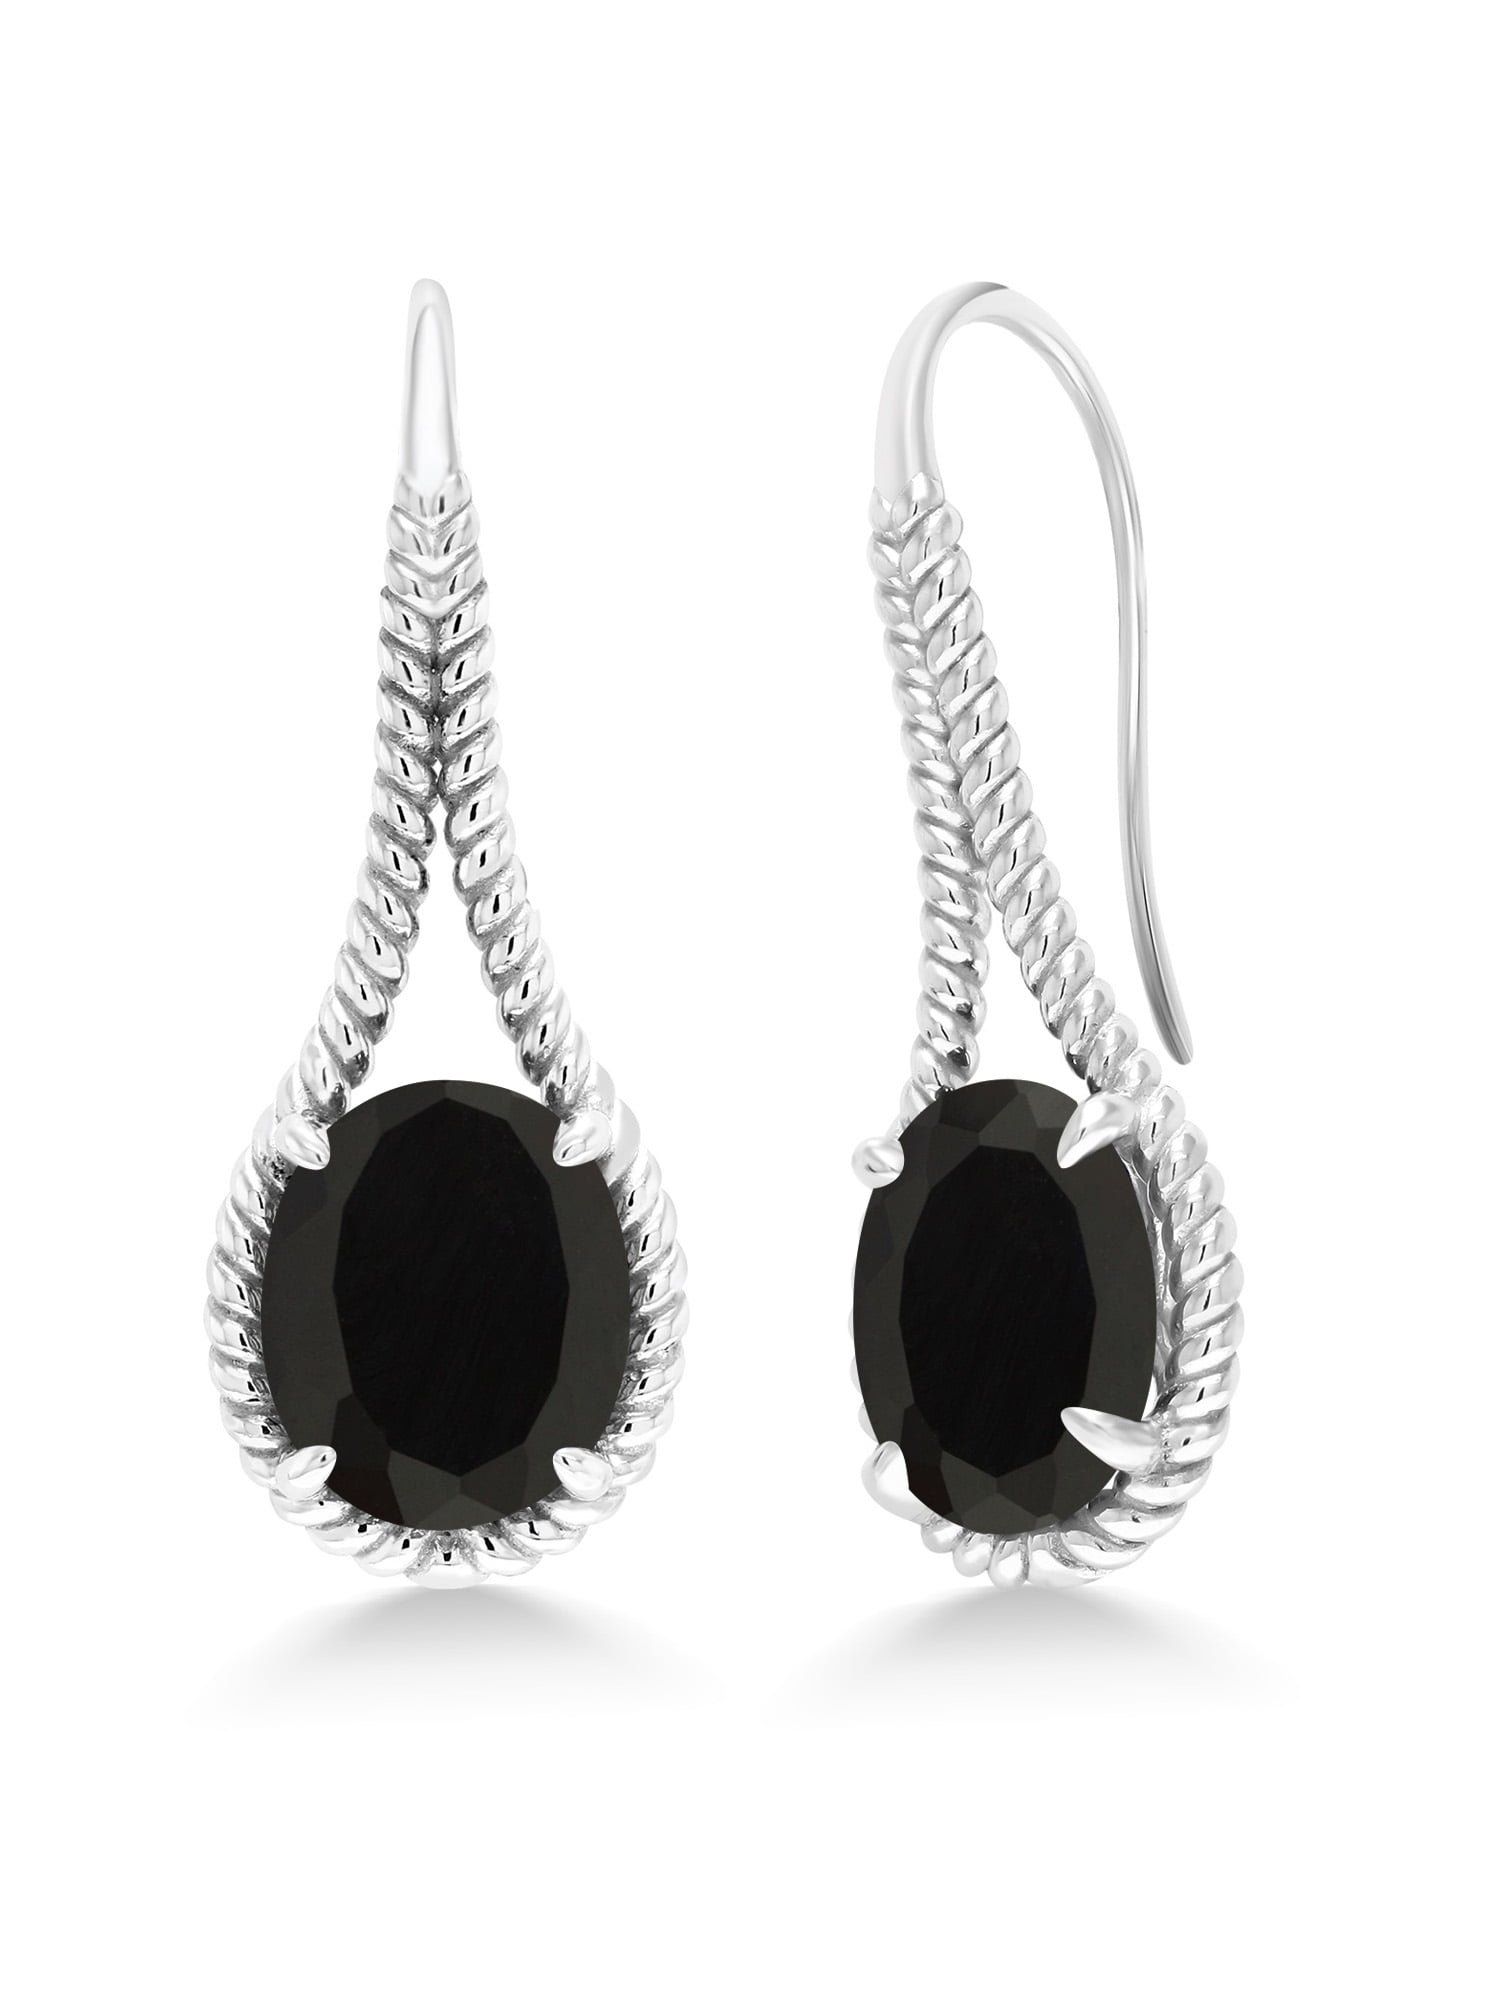 Gem Stone King 925 Sterling Silver Black Onyx Earrings For Women 